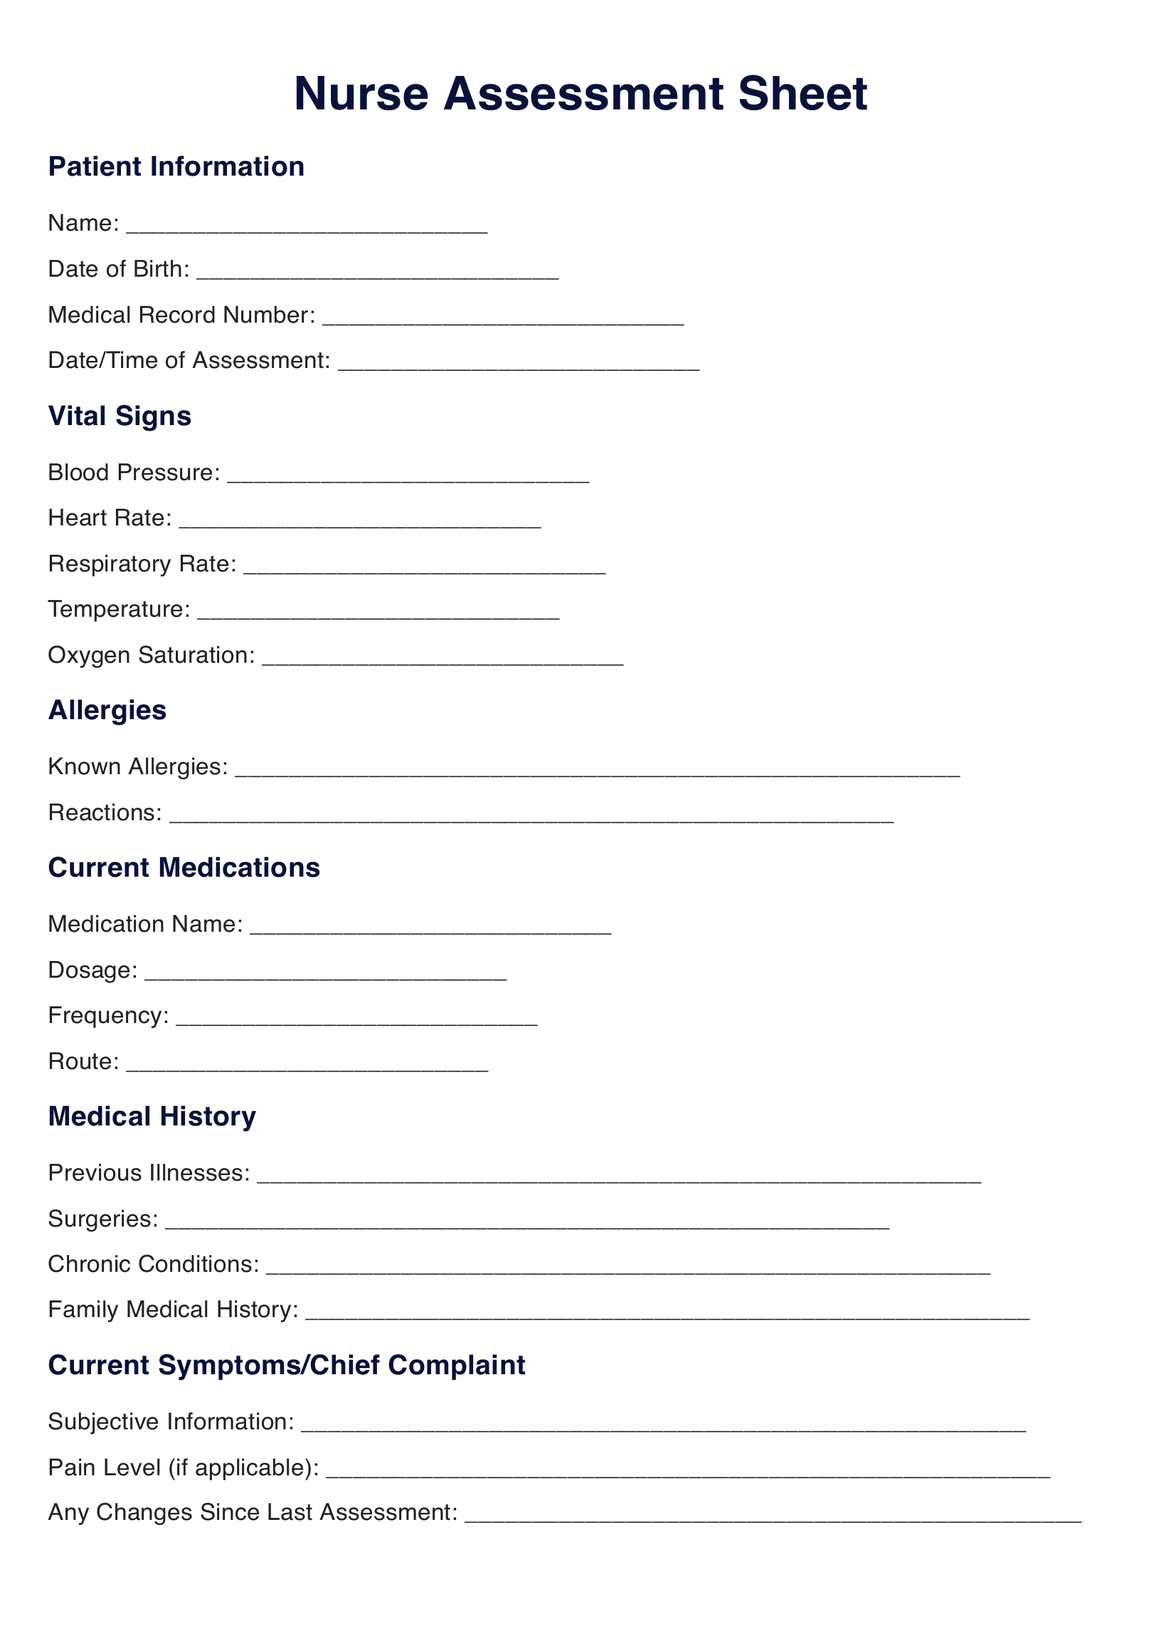 Nurse Assessment Sheet Template PDF Example